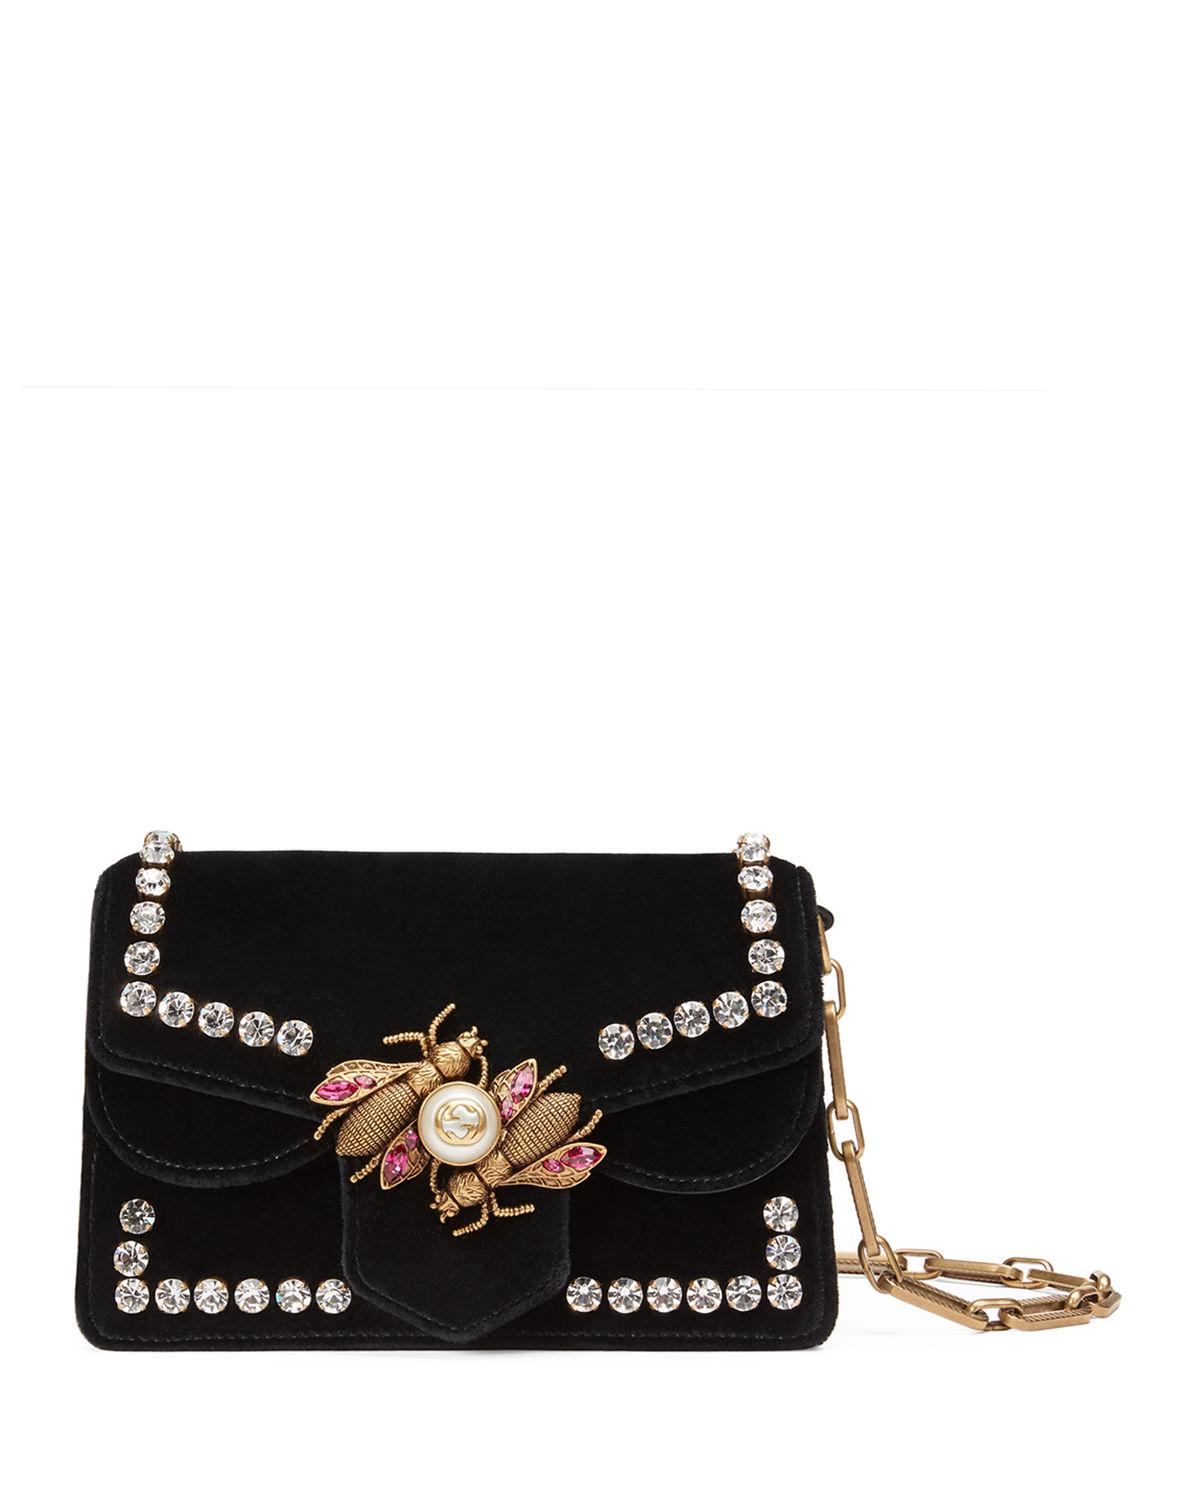 Lyst - Gucci Broadway Small Velvet Bee Shoulder Bag in Black